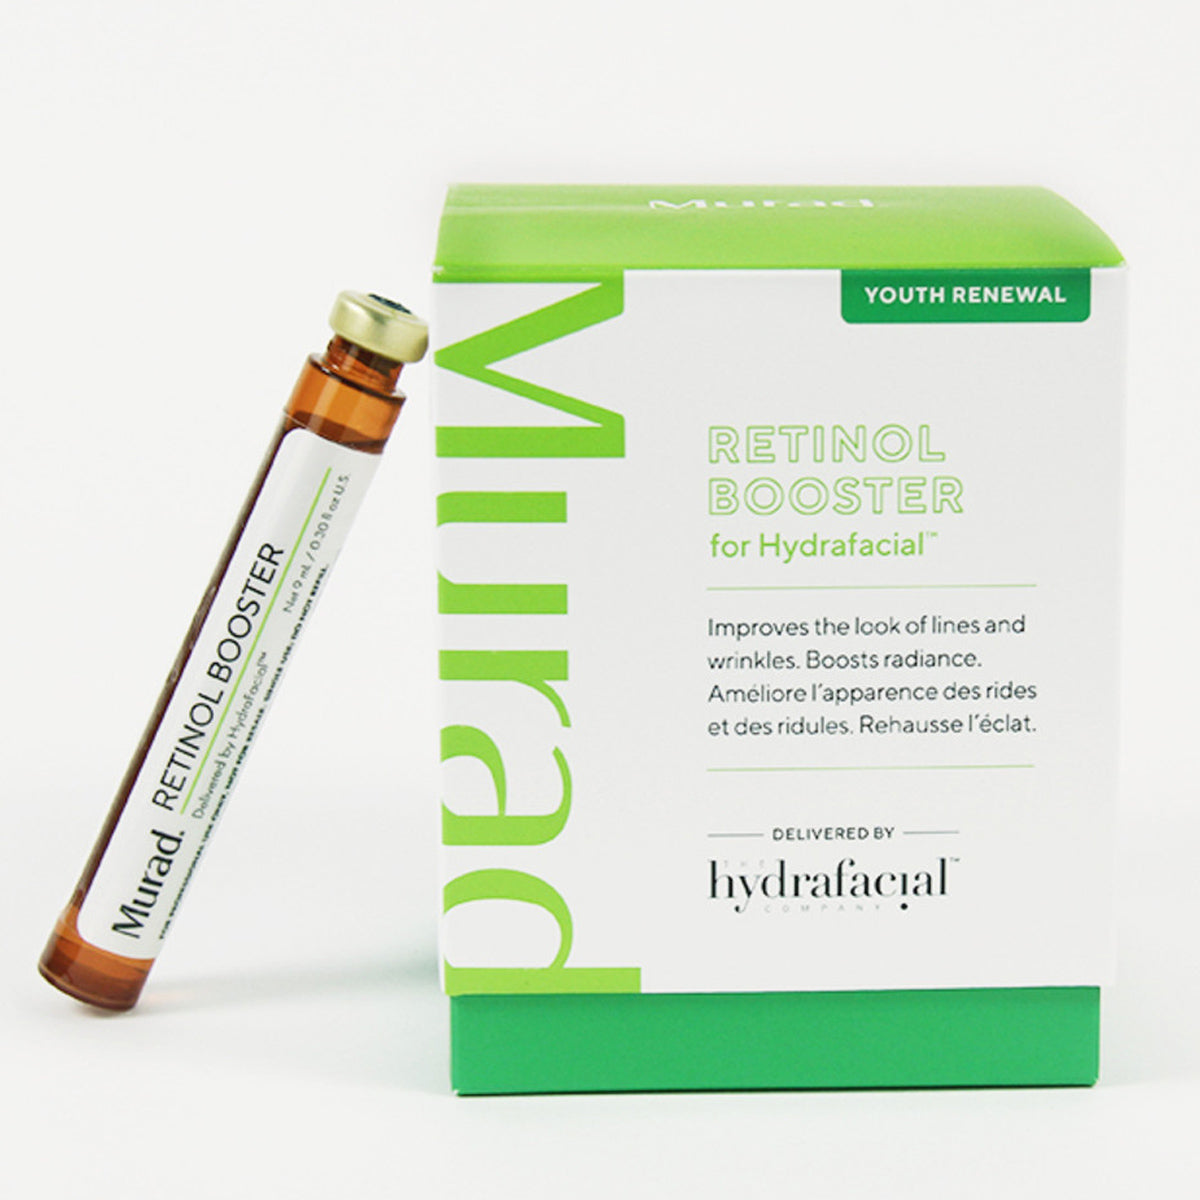 EDGE/HYDRAFACIAL Murad Retinol Booster for HydraFacial